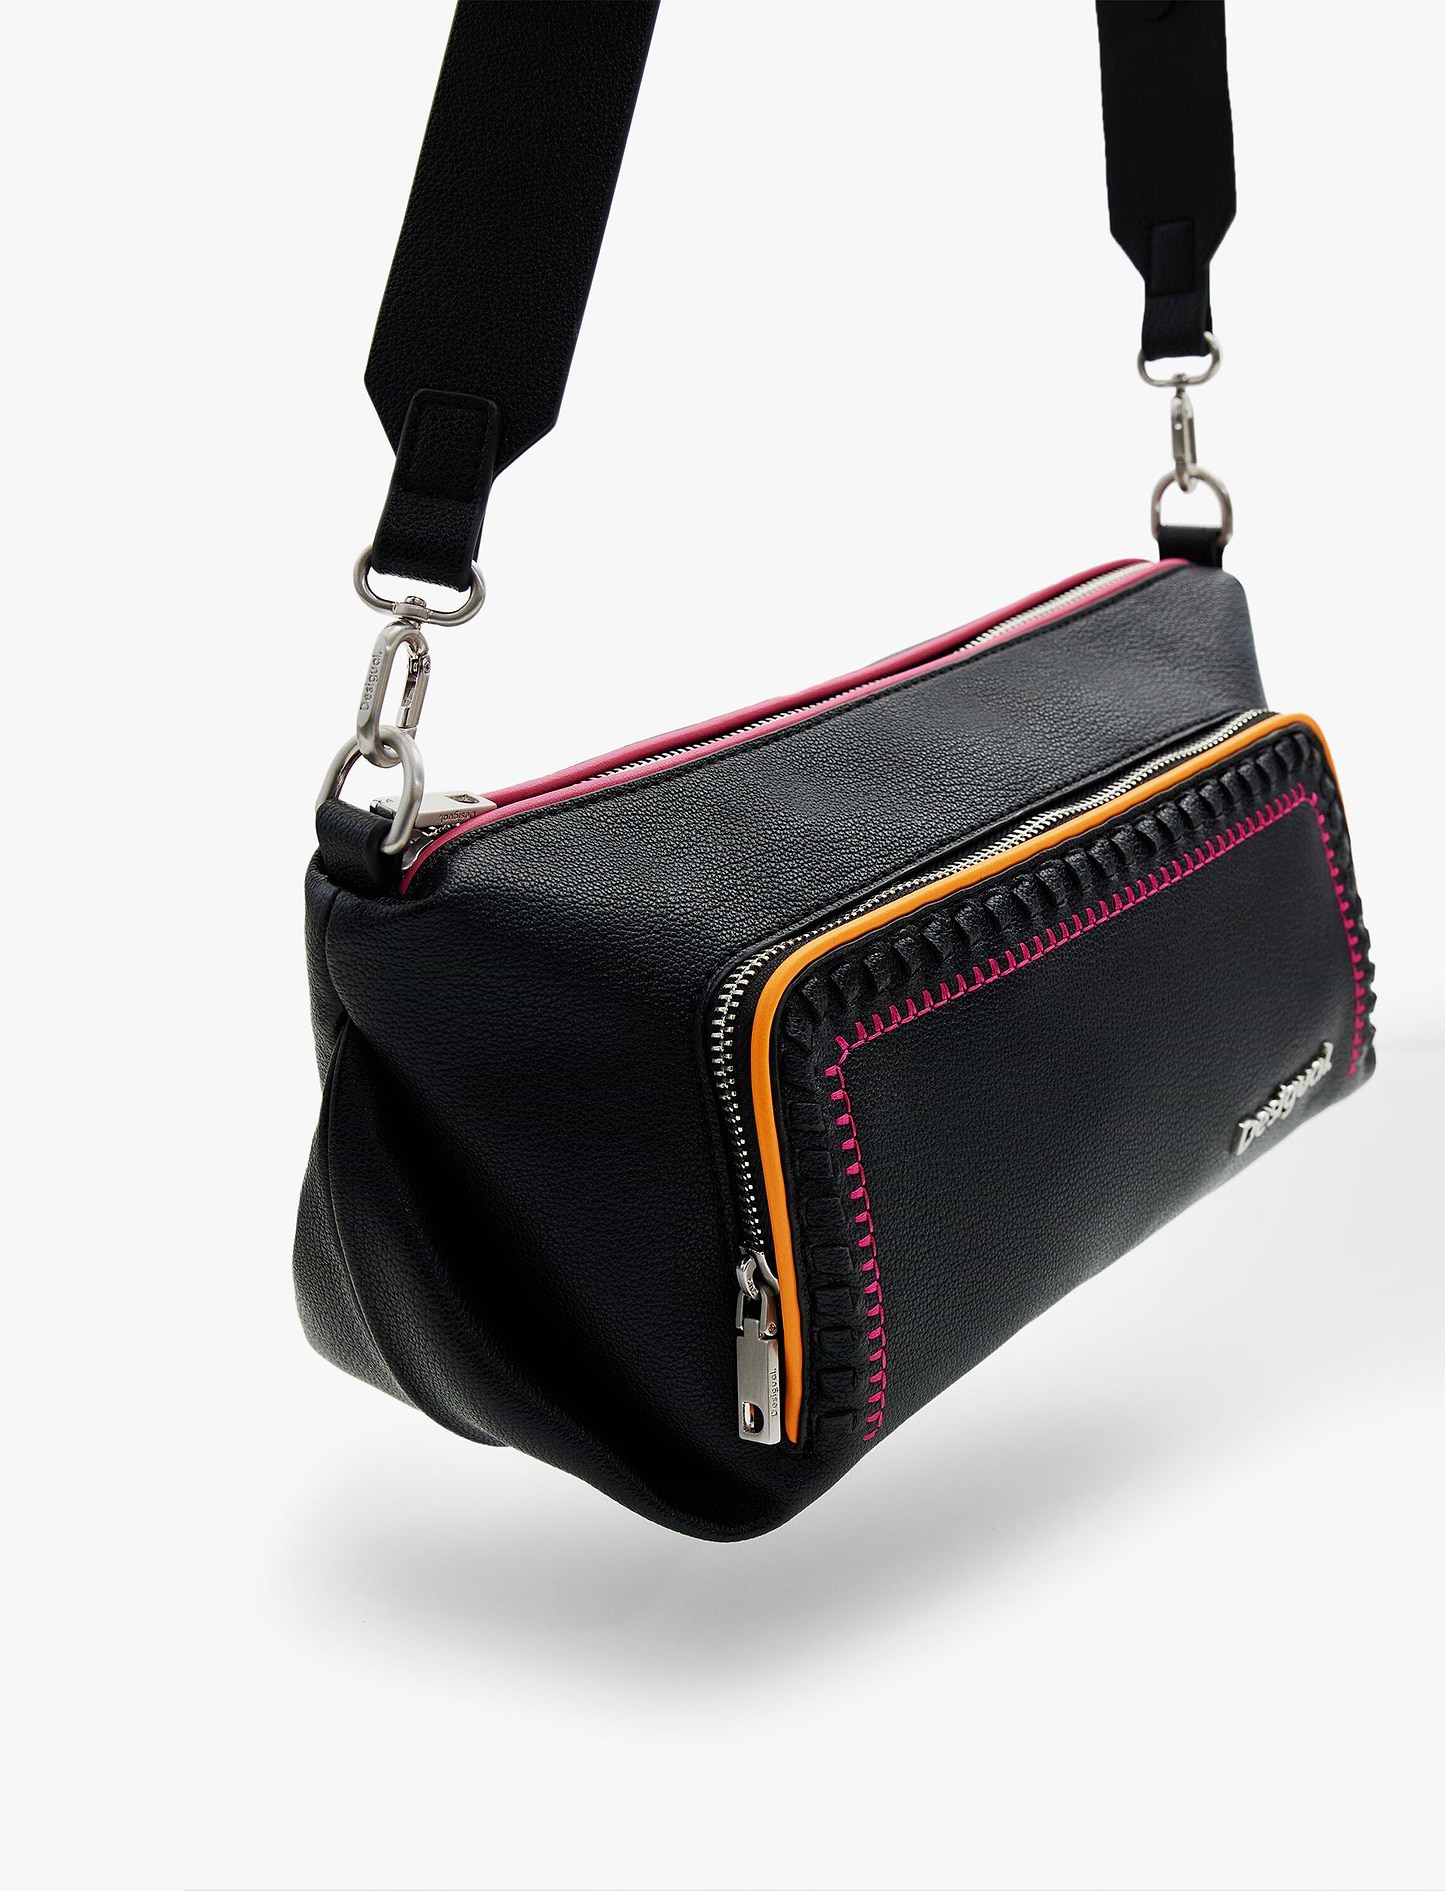 Desigual Bag Prime Urus Maxi - תיק כתף בצבע שחור